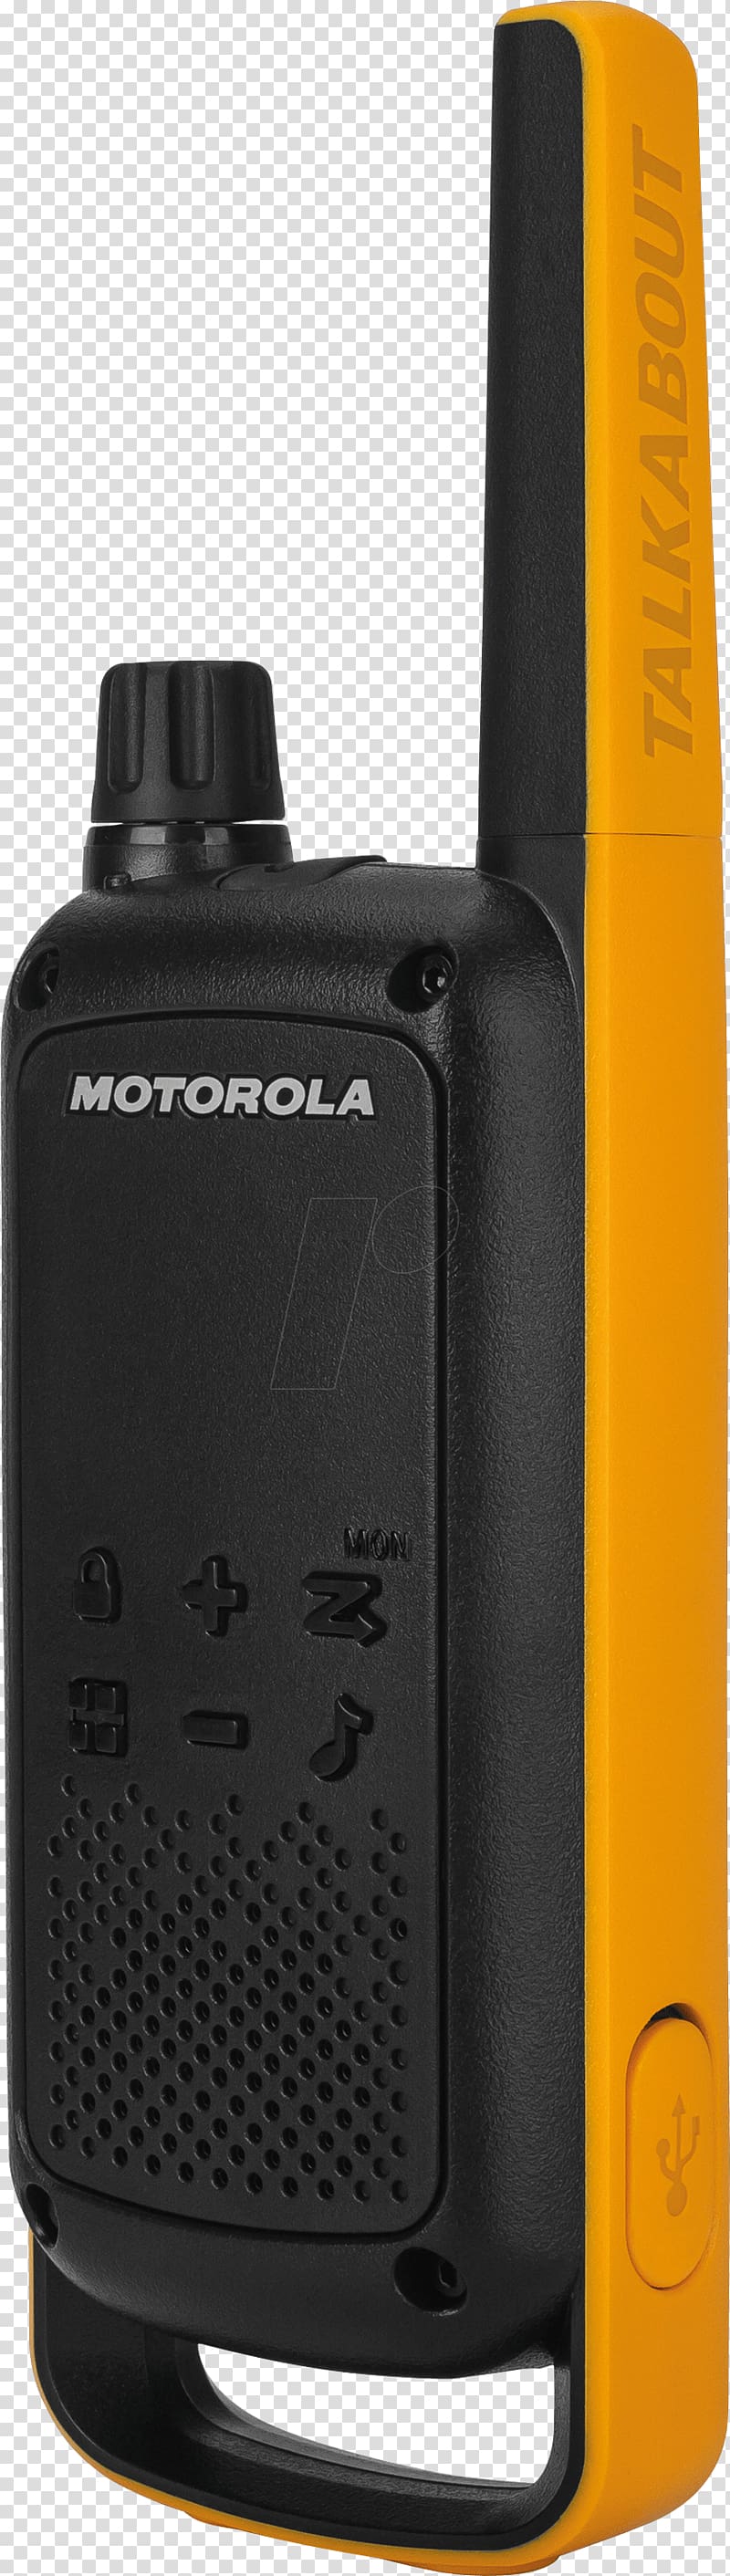 Motorola Talkabout T82 Extreme 188069 PMR446 Walkie-talkie Two-way radio Professional mobile radio, walkie talkie transparent background PNG clipart